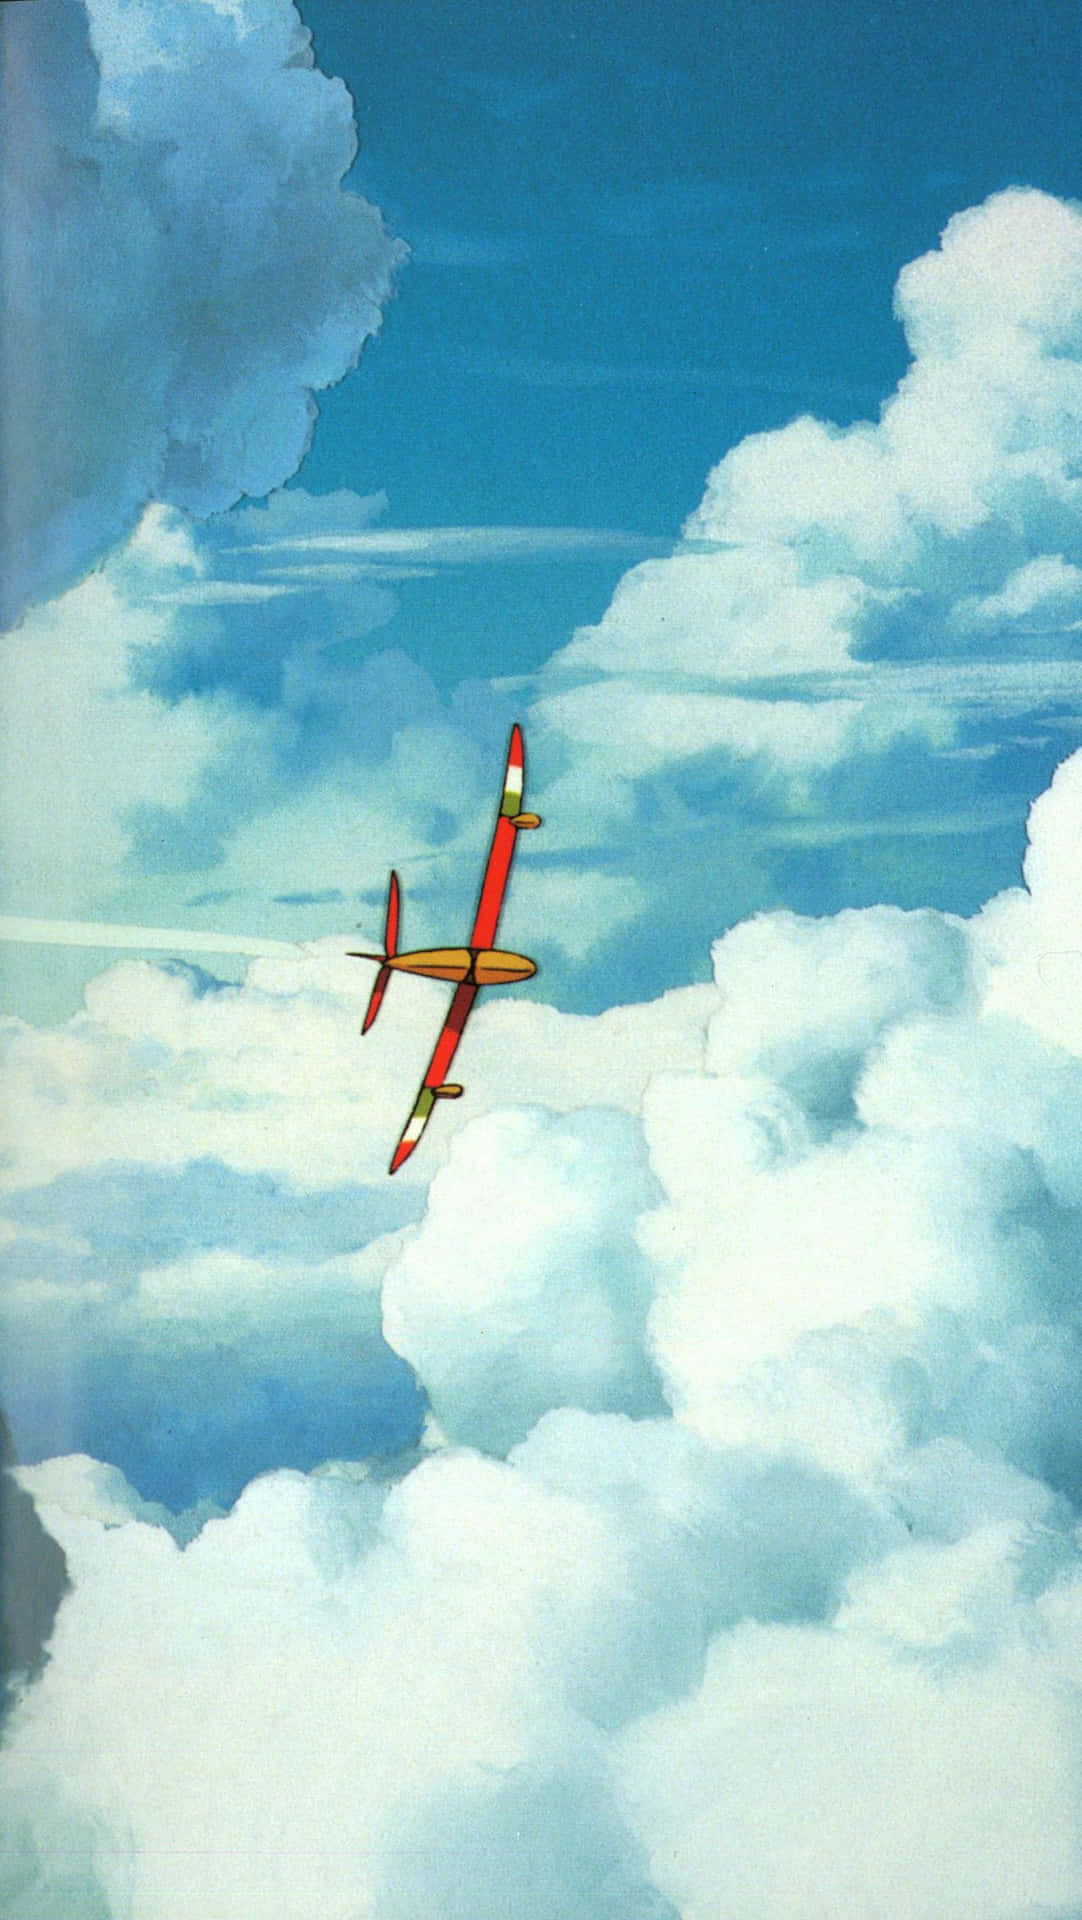 Porco Rosso, the daring pilot, soaring through the skies Wallpaper